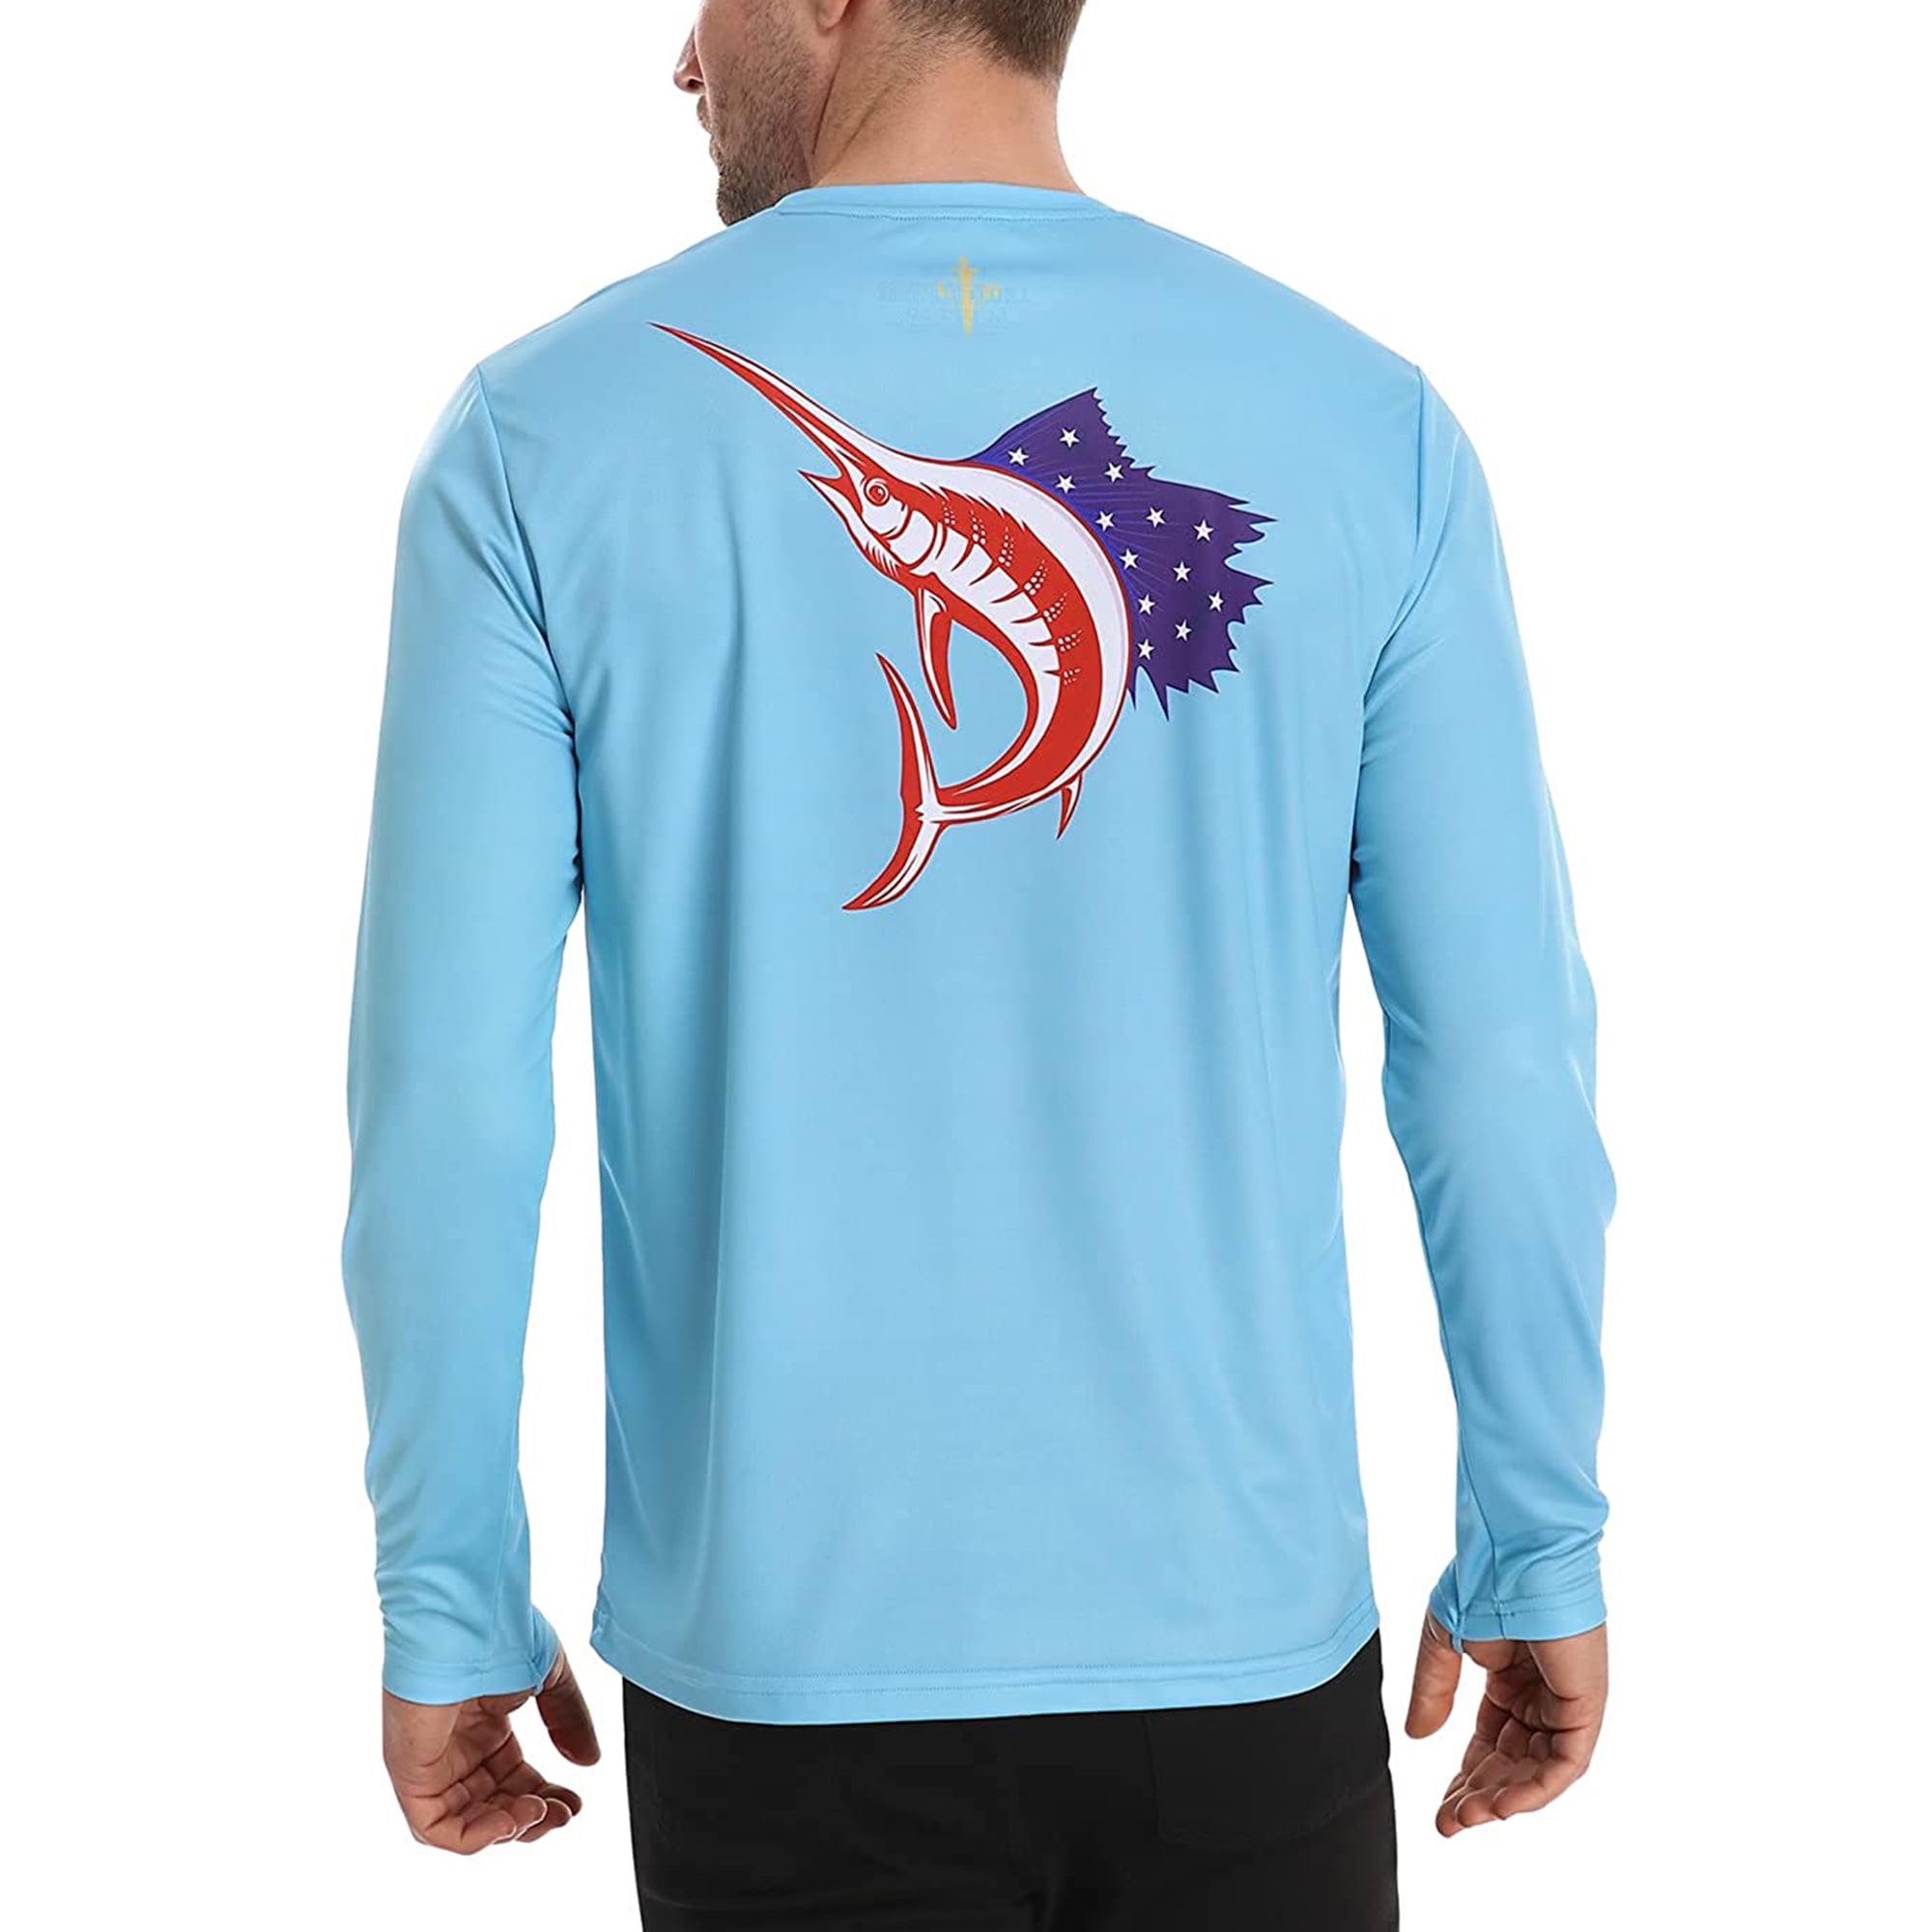 LRD Fishing Shirts for Men Long Sleeve UPF 50 Sun Protection Performance  Shirt USA Sailfish Blue - XXXL 